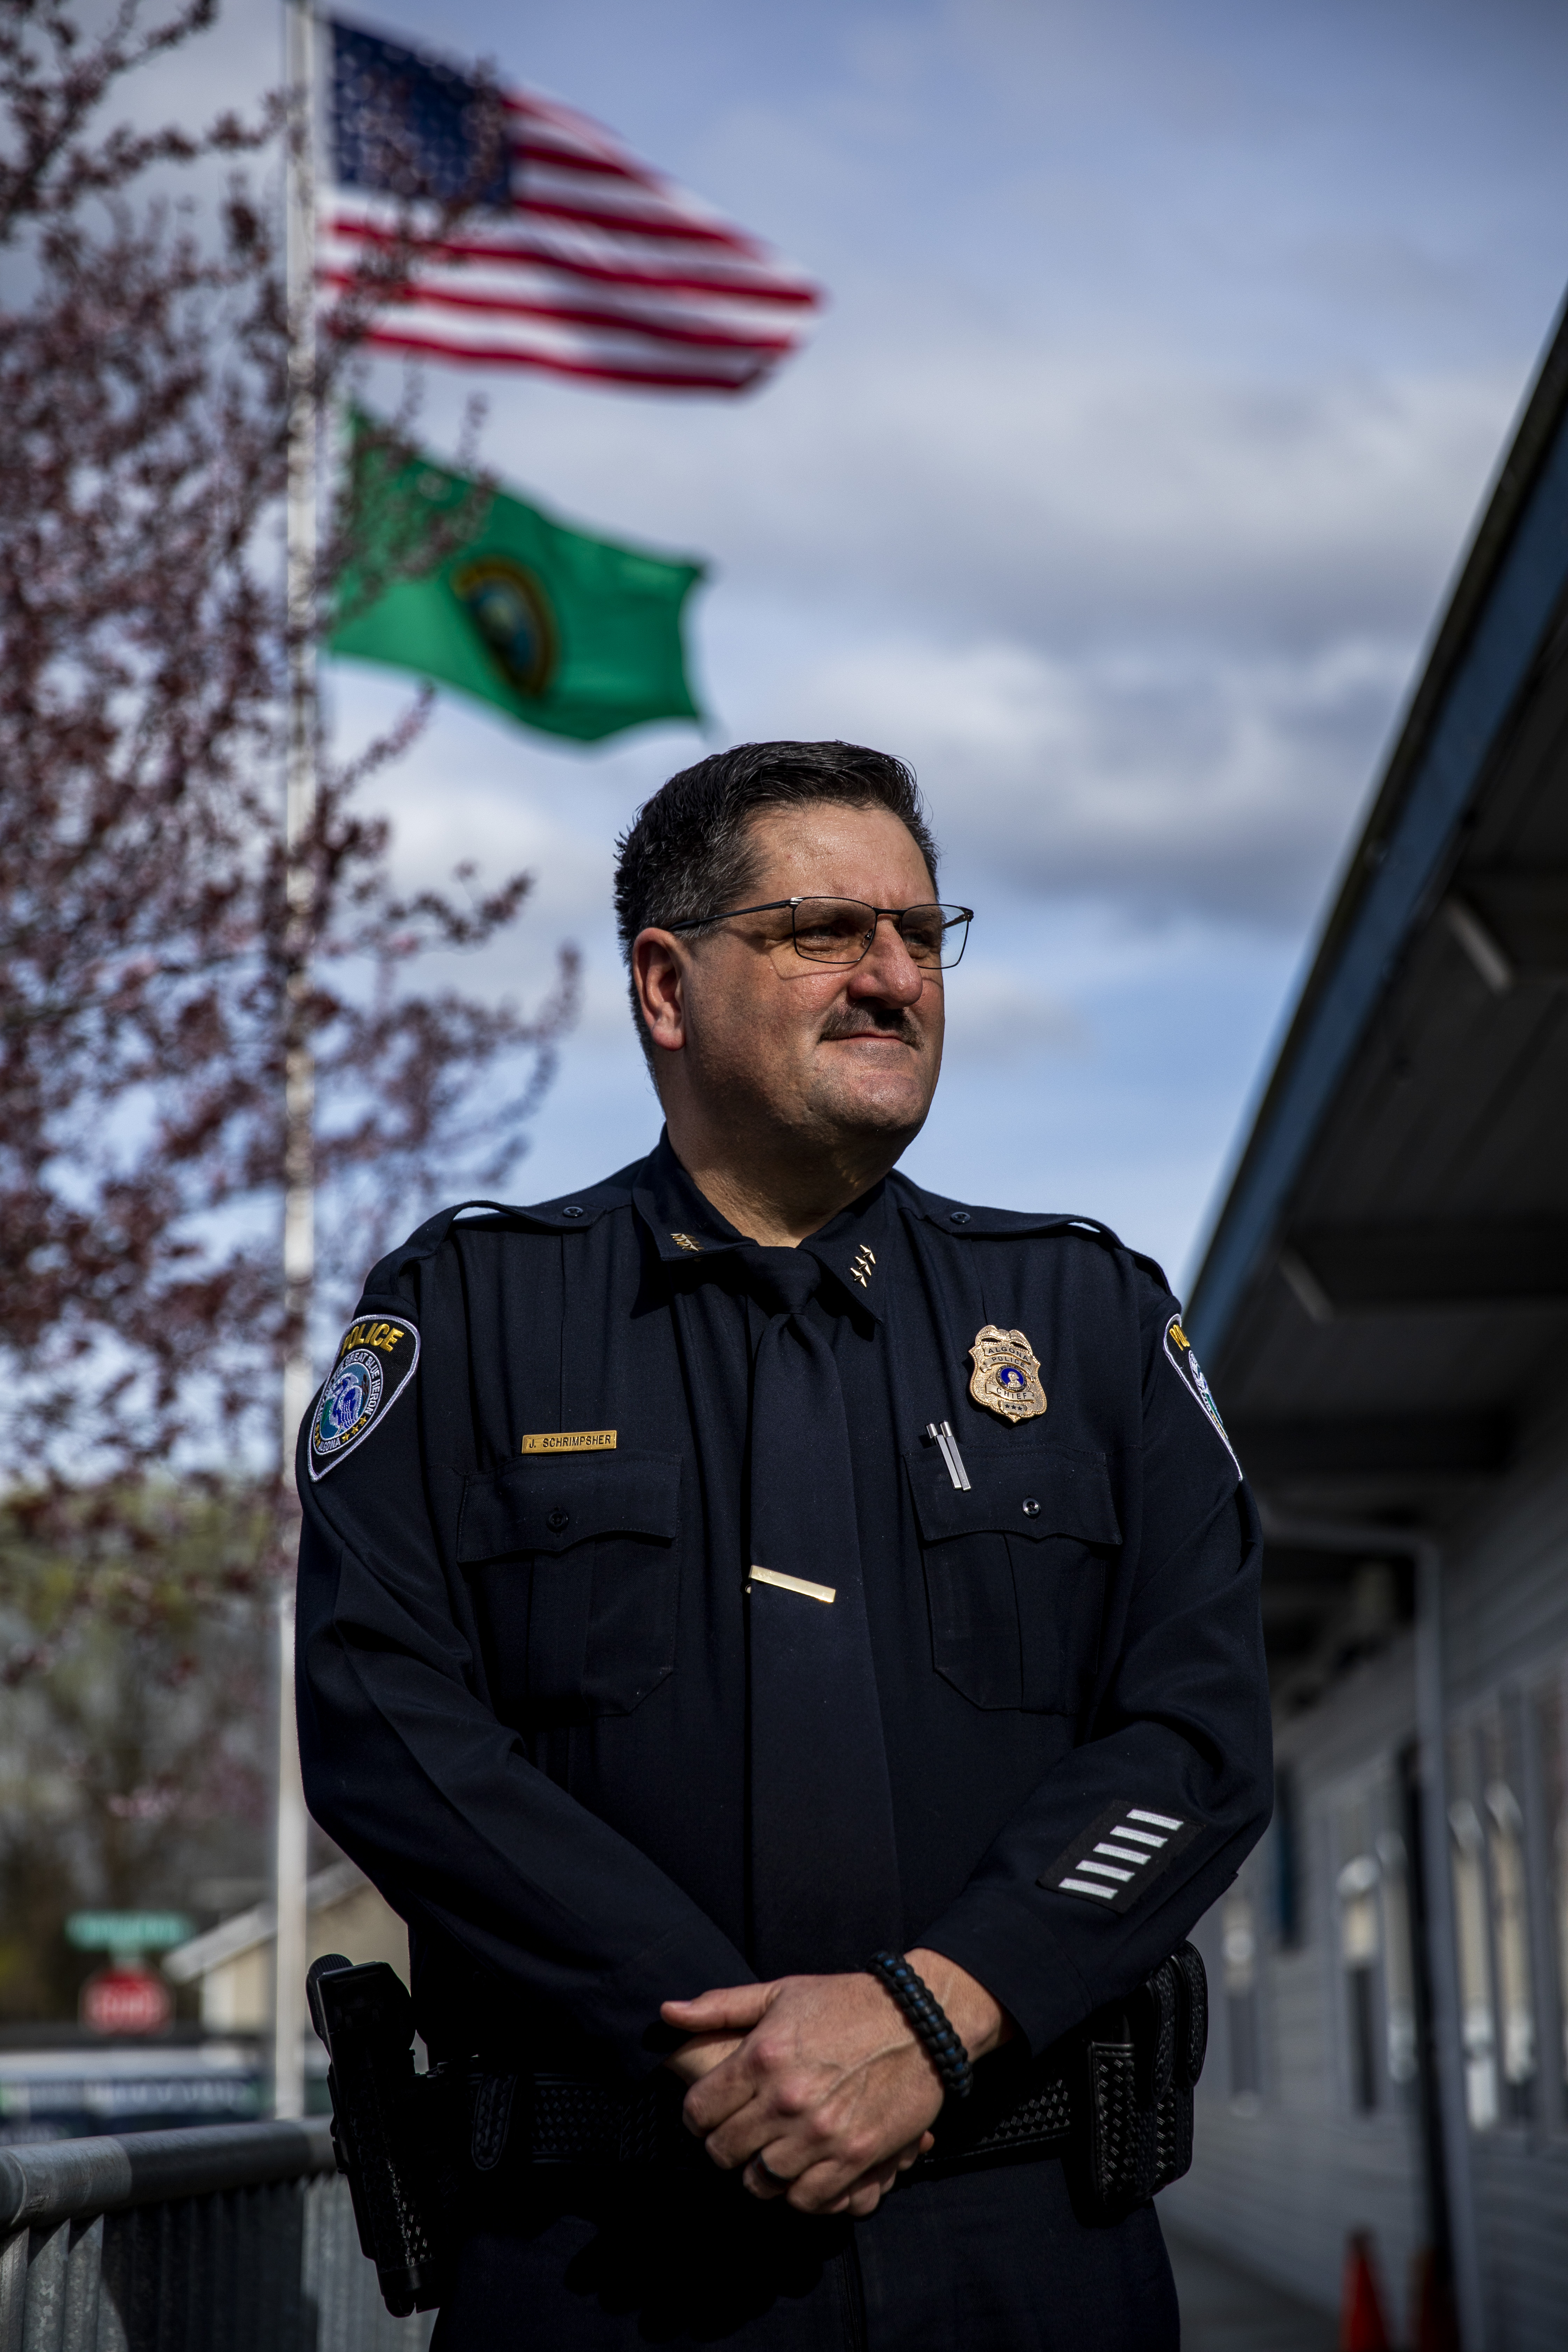 Police Chief James Schrimpsher of the city of Algona, Washington